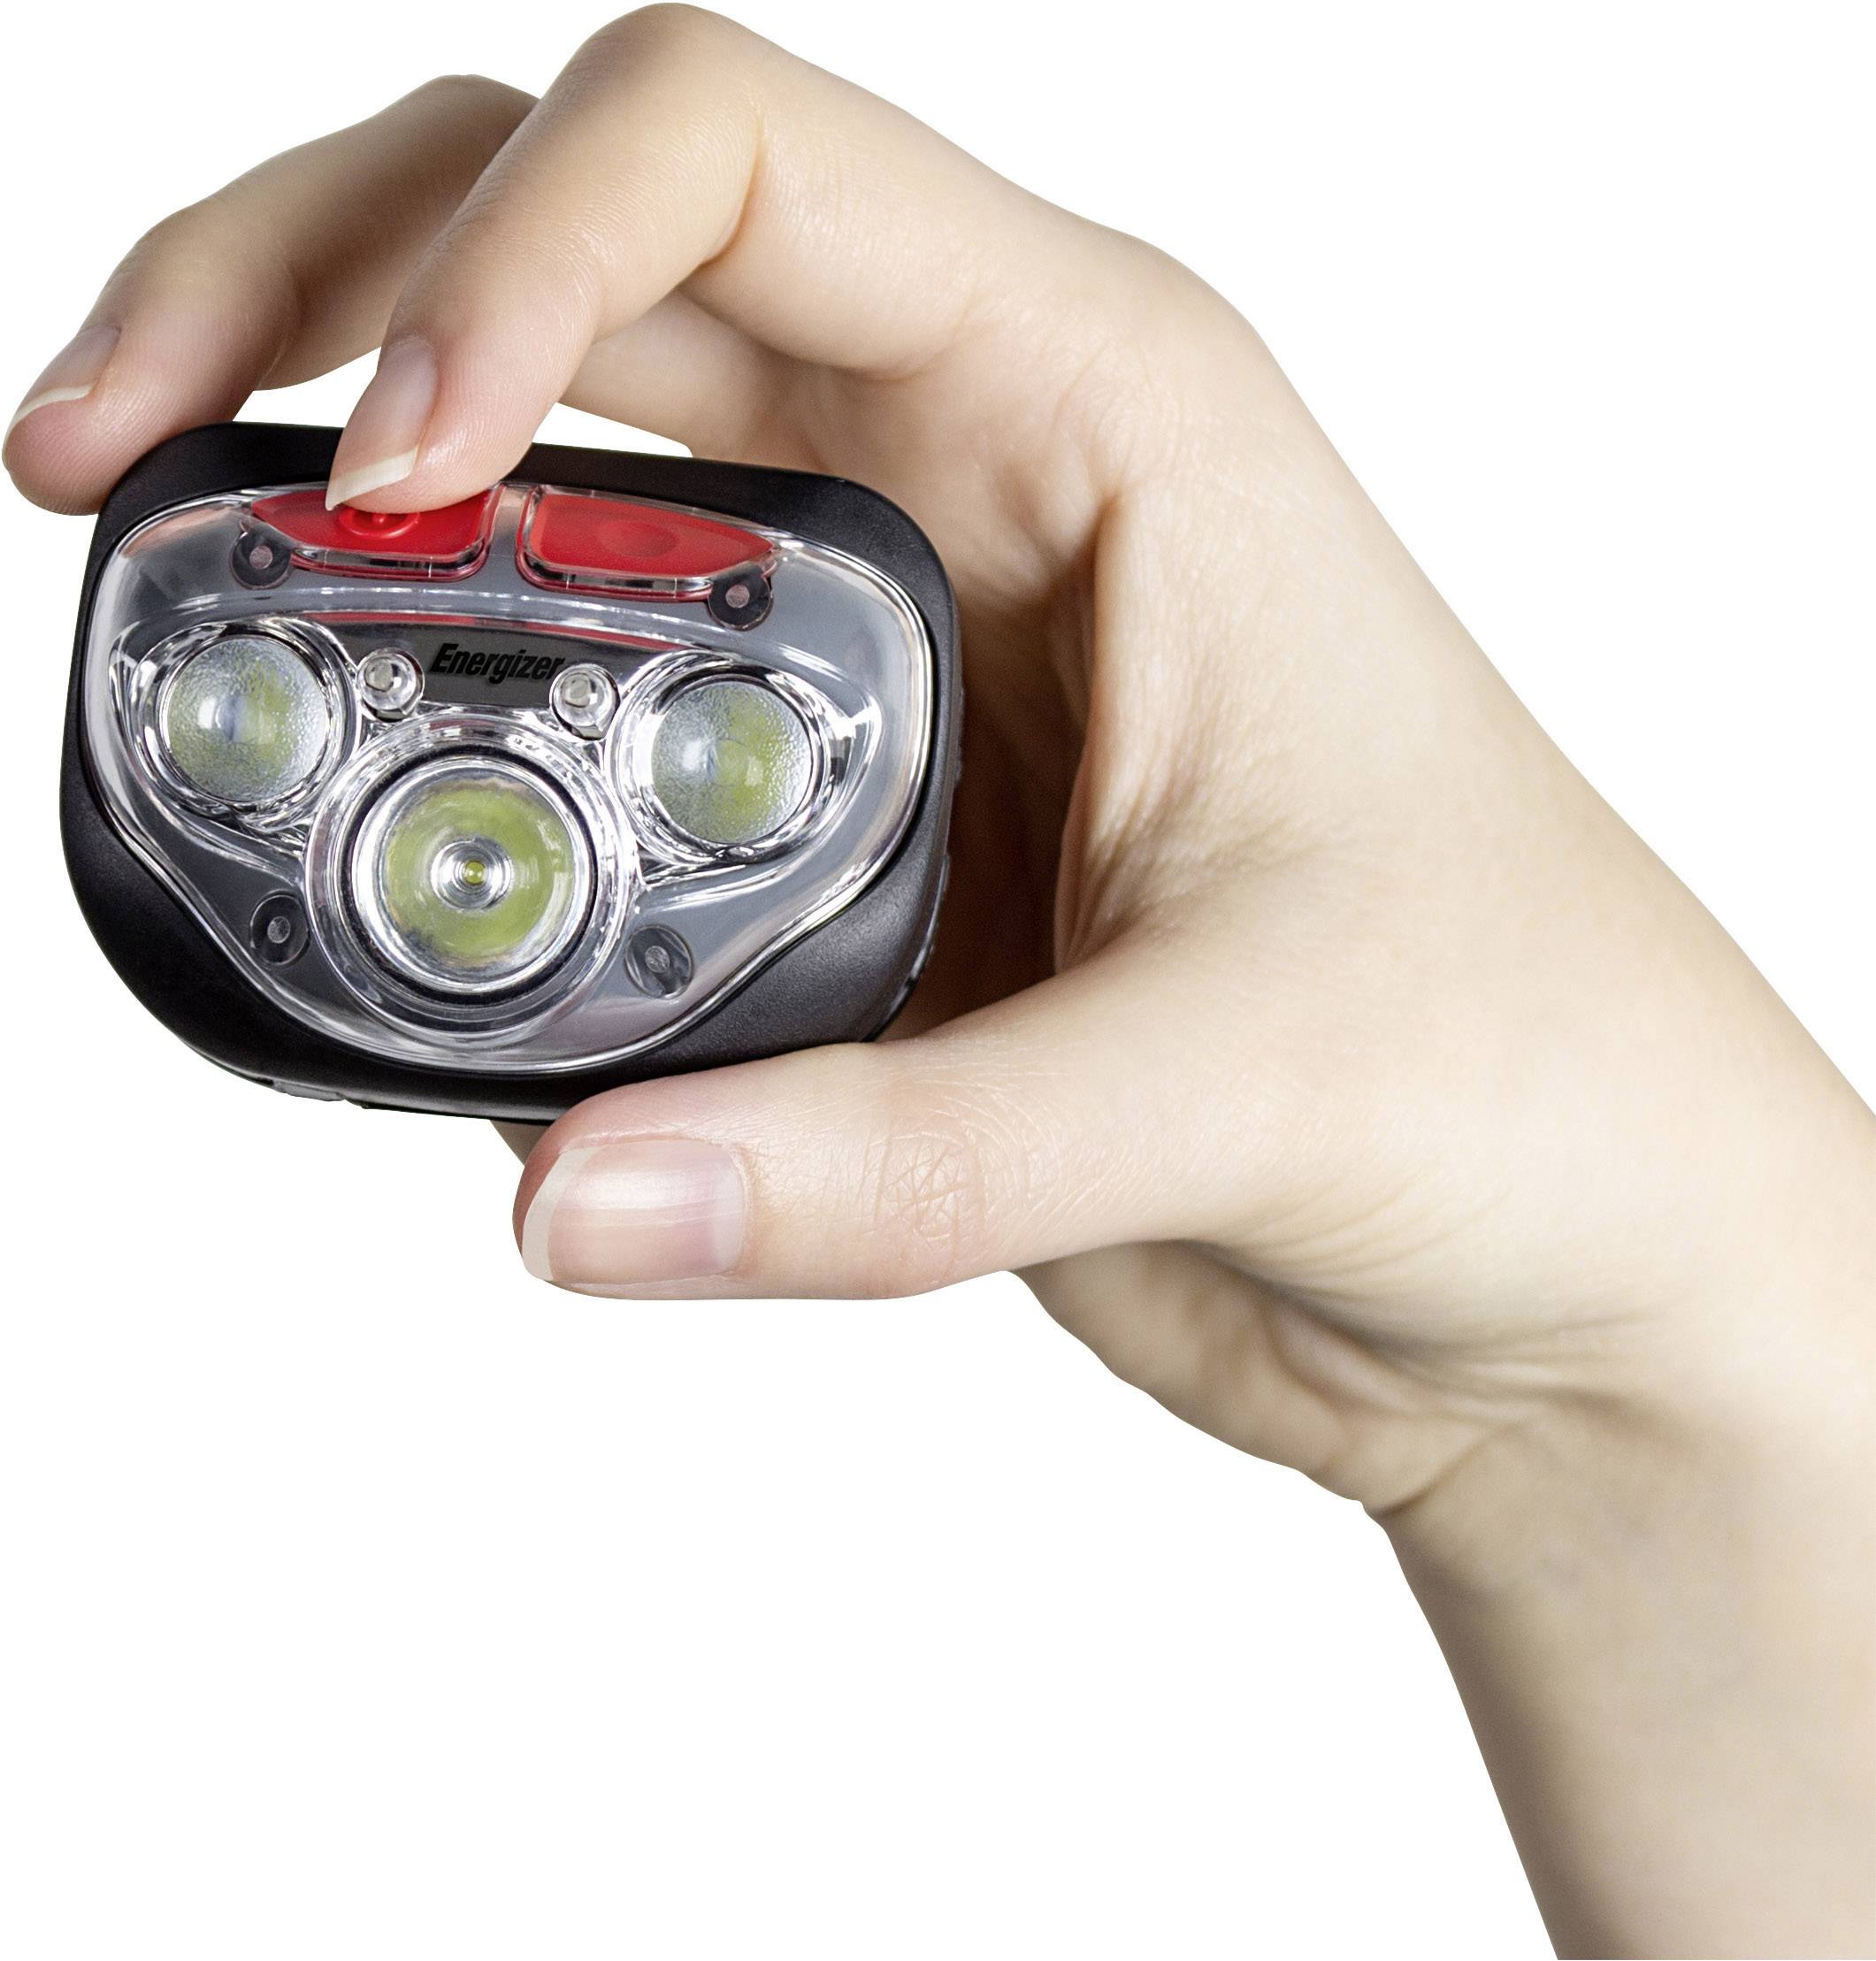 ENERGIZER LED Stirnlampe Energizer Vision HD+ Focus batteriebetrieben E300280700